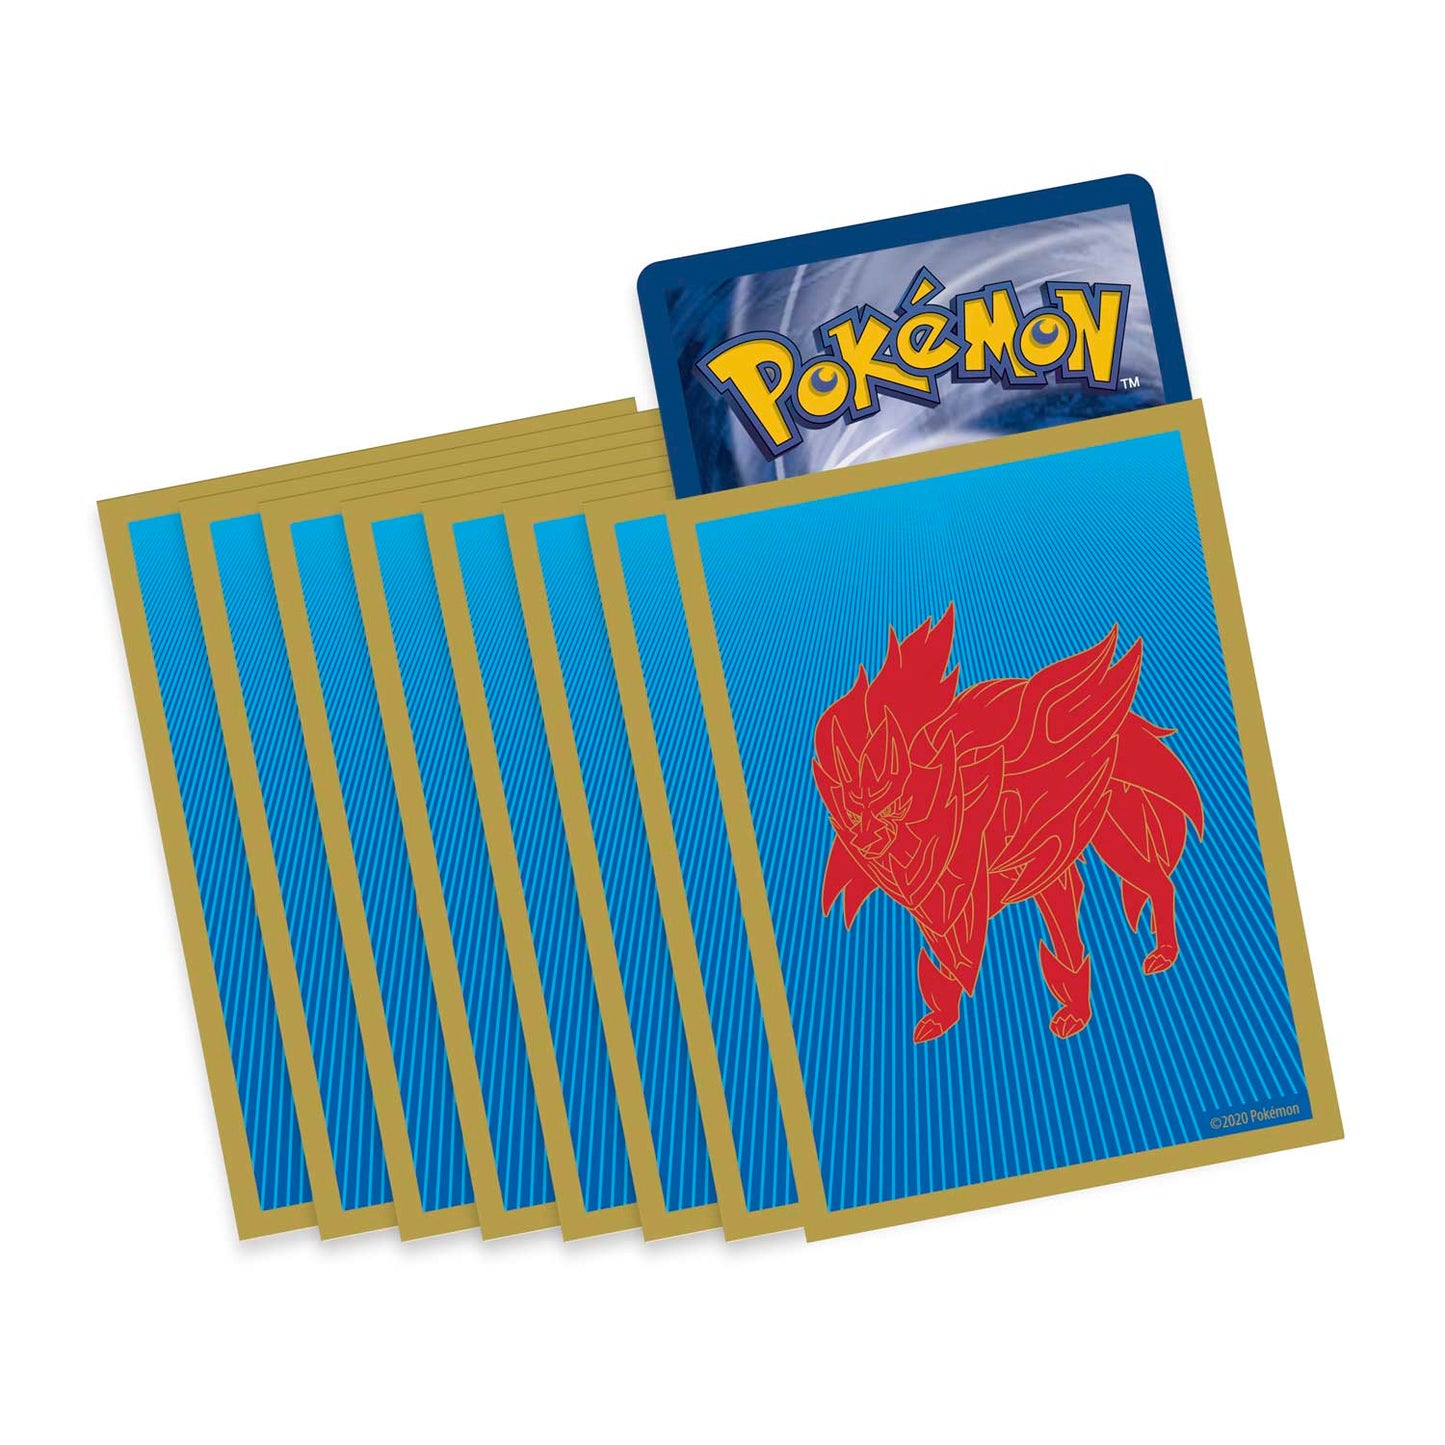 Pokemon Trading Card Game Official Card Sleeves x65 - Zamazenta